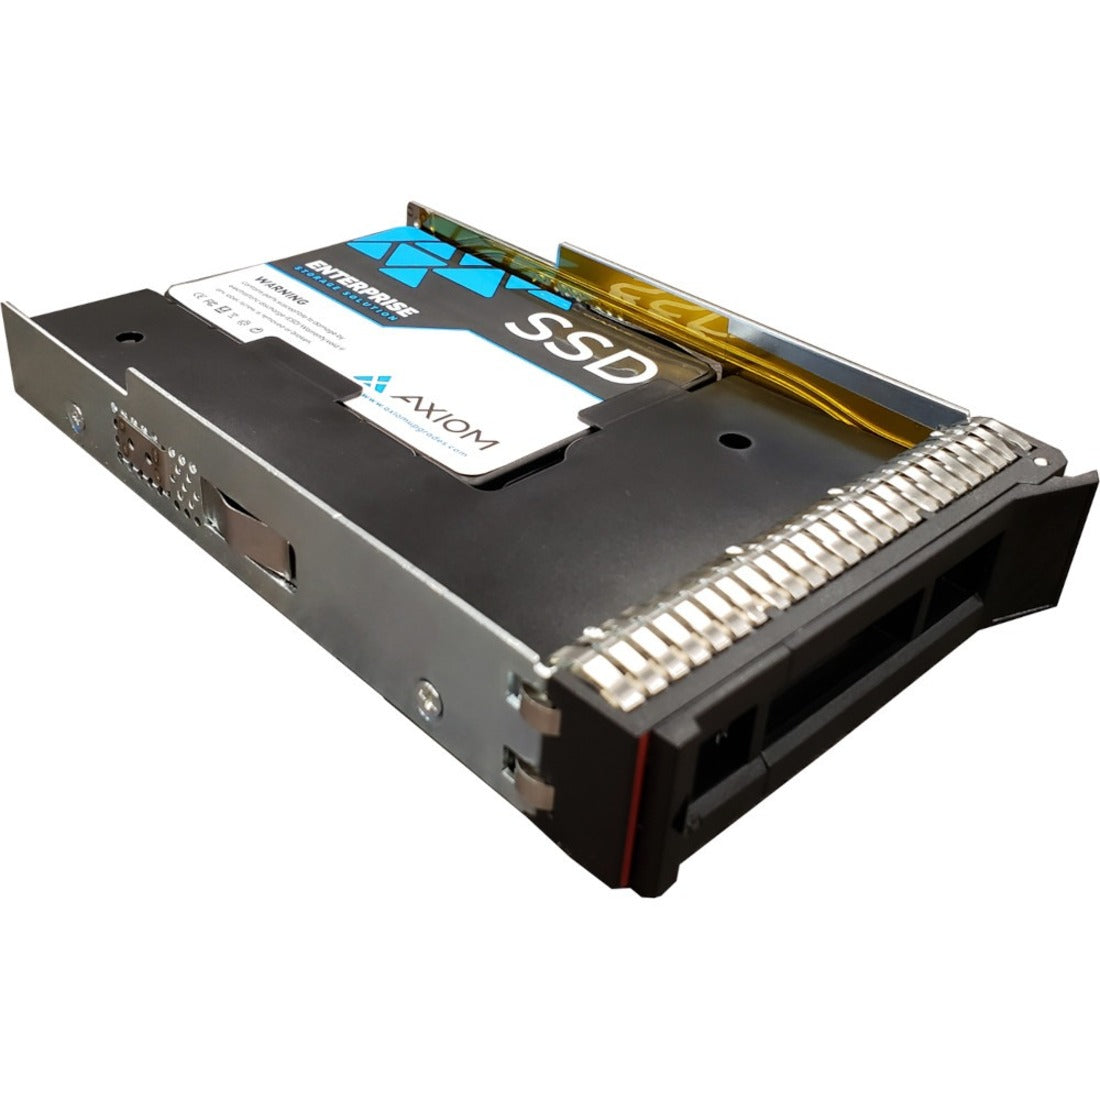 Axiom SSDEP45LS960-AX 960GB Enterprise Pro EP450 3.5-inch Hot-Swap SAS SSD, 5 Year Warranty, 2100 MB/s Maximum Read Transfer Rate